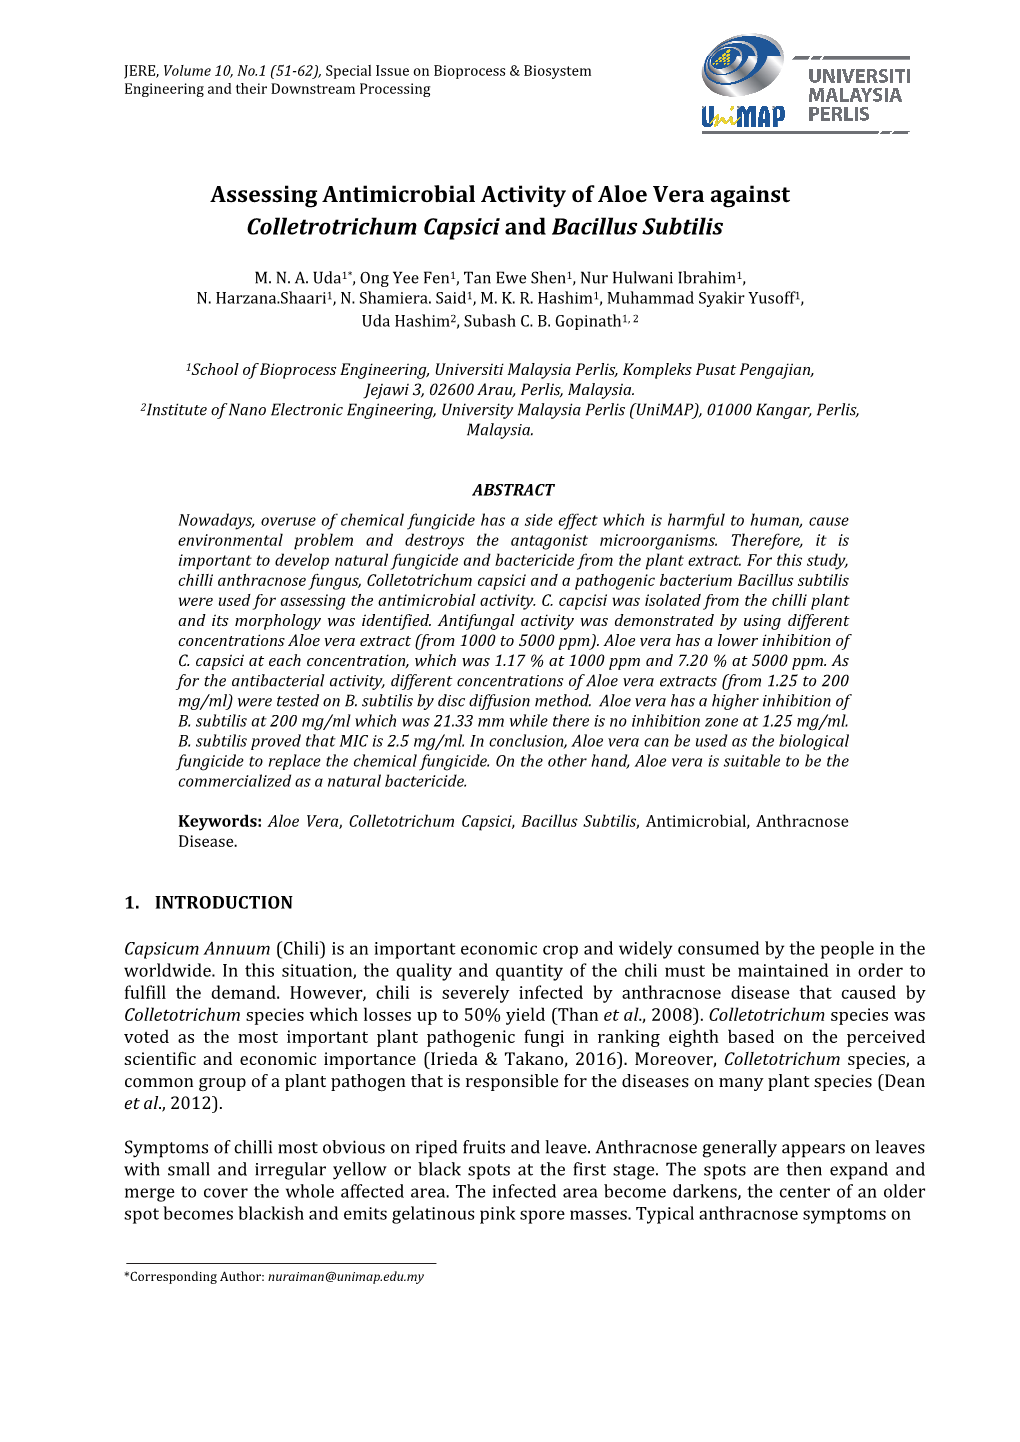 Assessing Antimicrobial Activity of Aloe Vera Against Colletrotrichum Capsici and Bacillus Subtilis